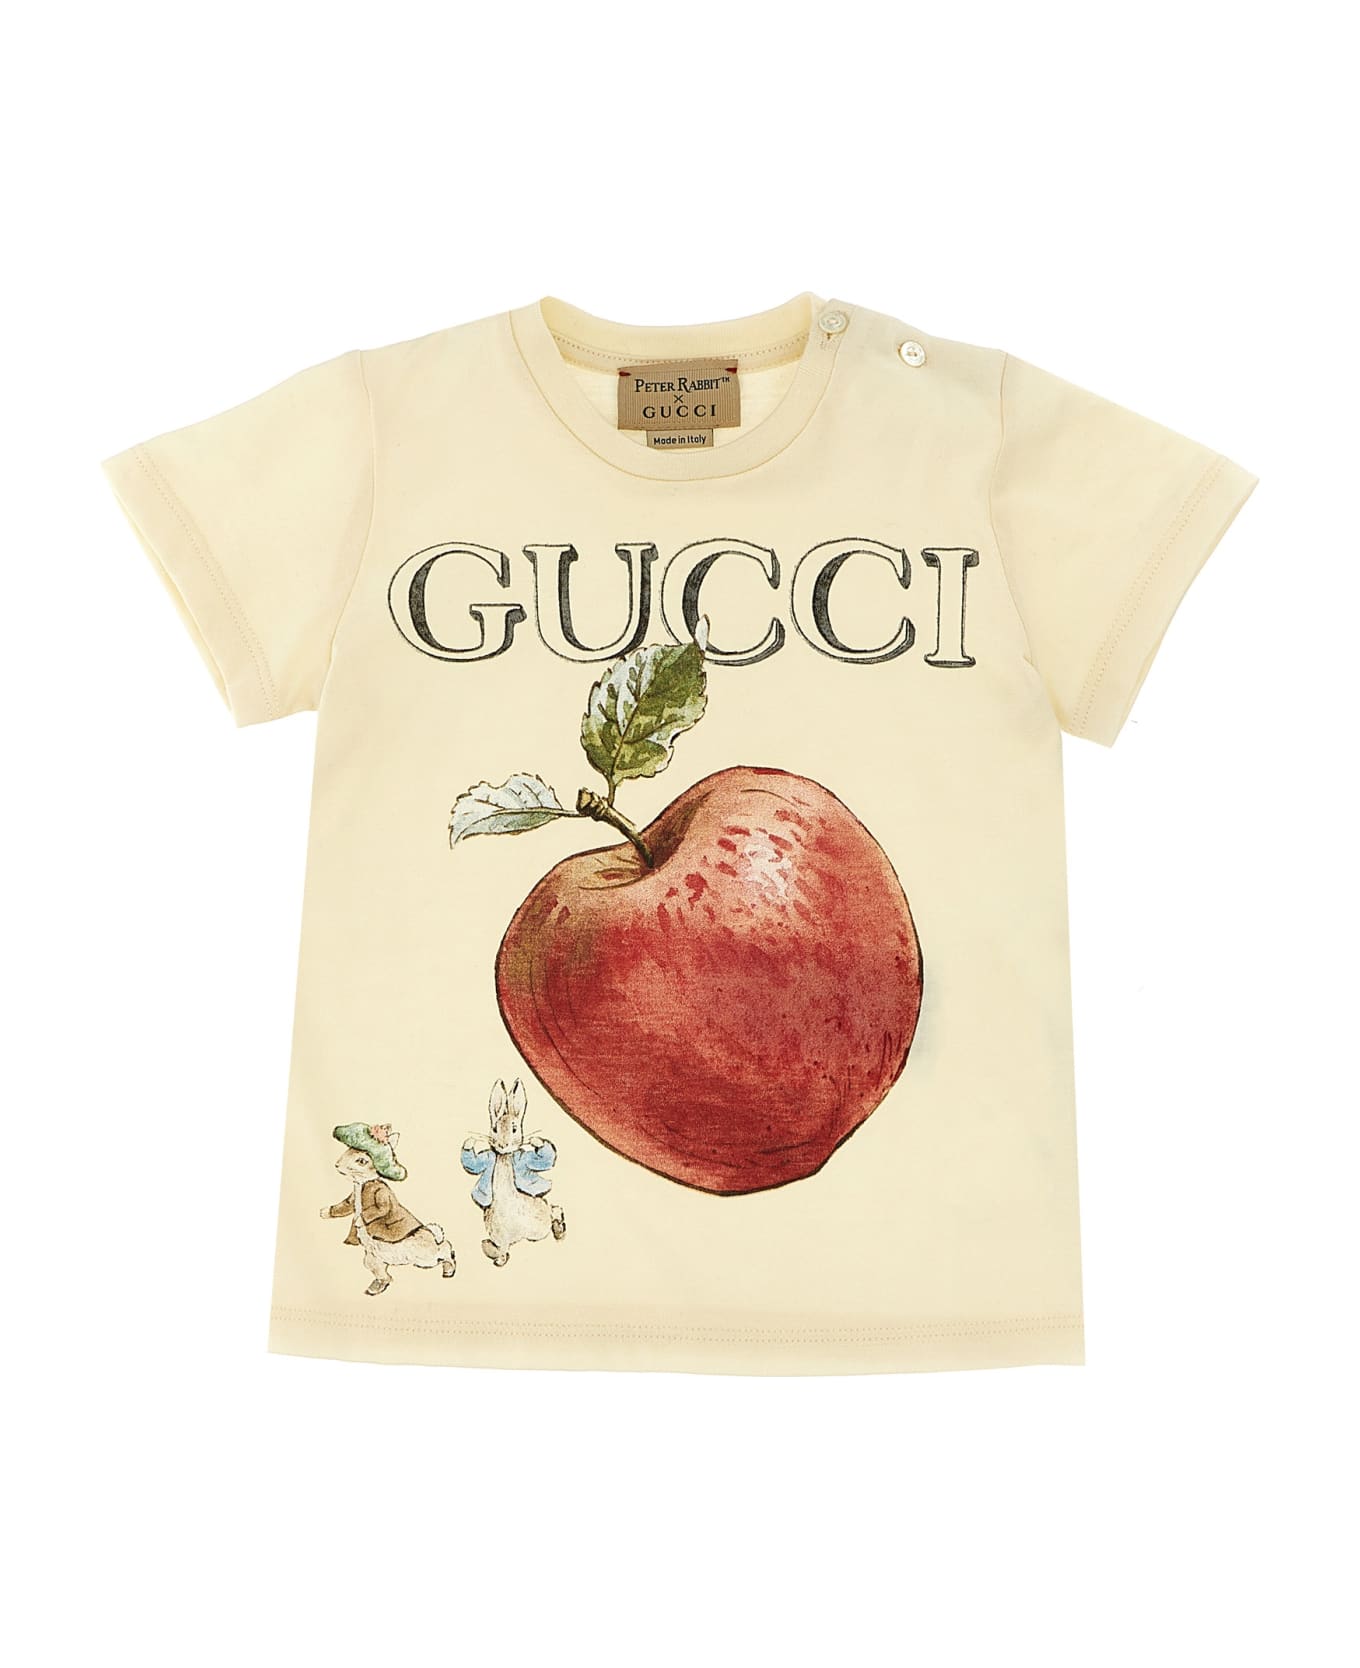 Gucci Printed T-shirt Peter Rabbit X Gucci - Beige